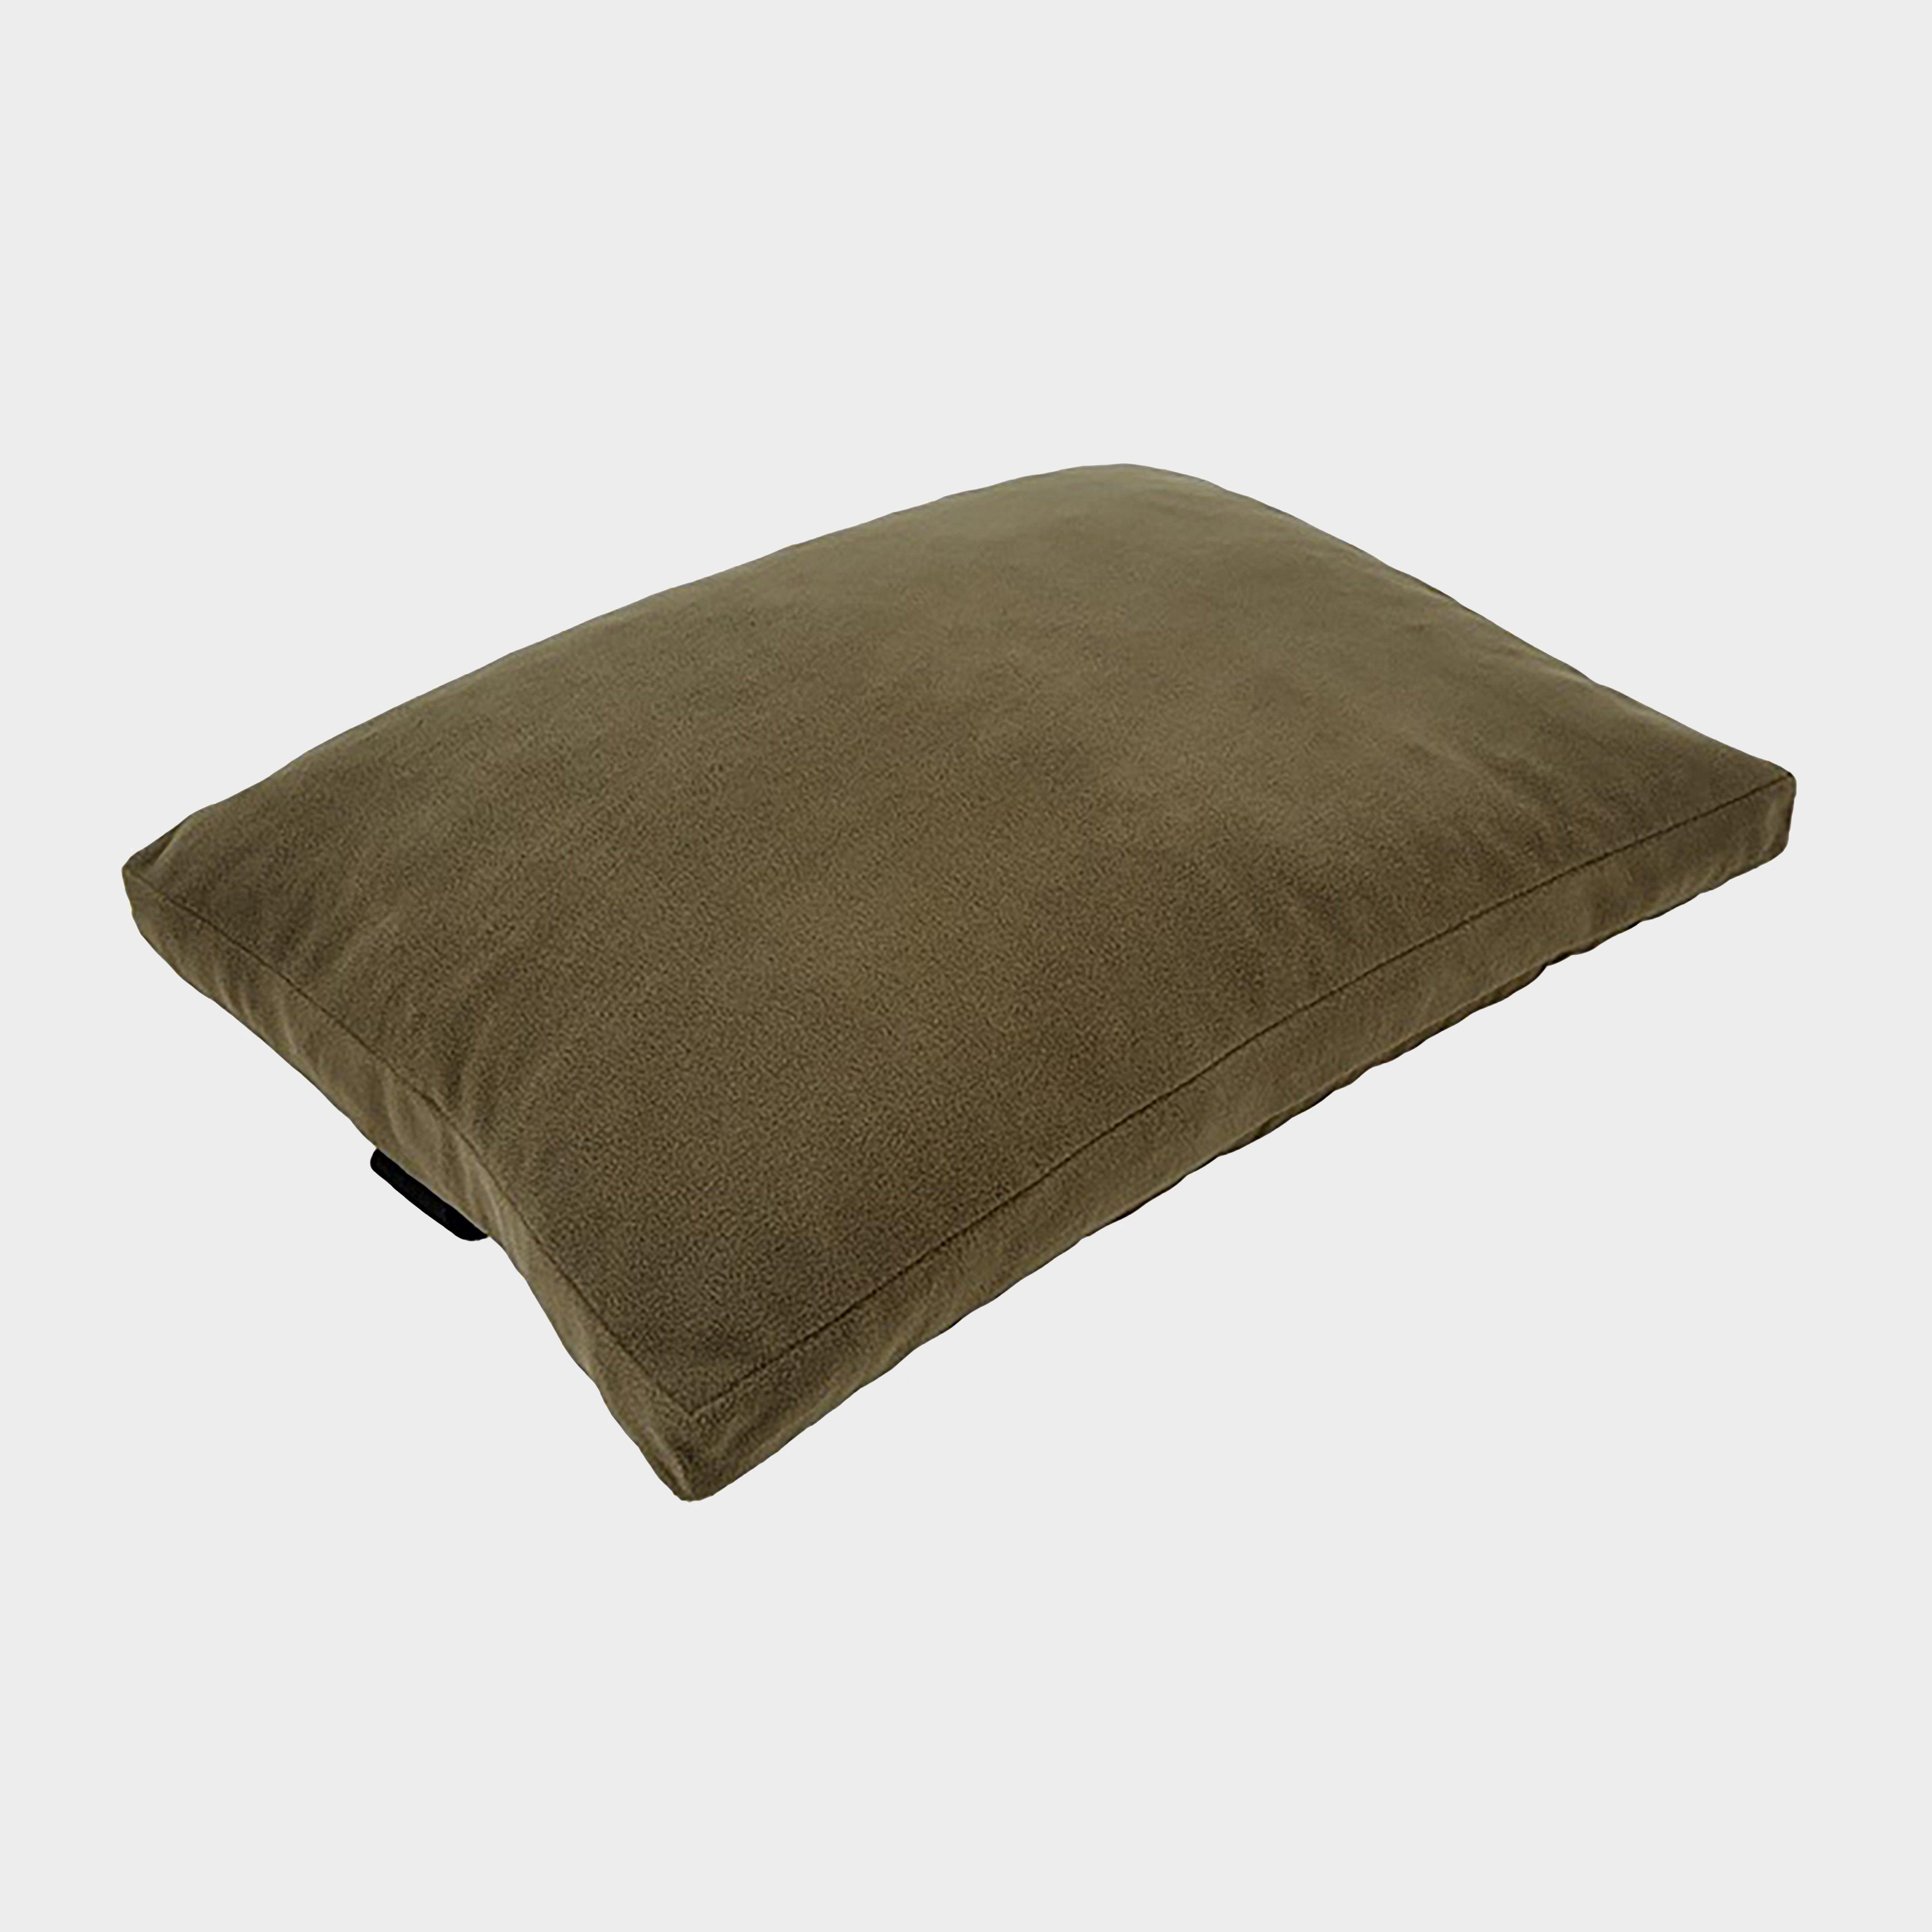 Westlake Double Sided Pillow Large - Lge/lge  Lge/lge